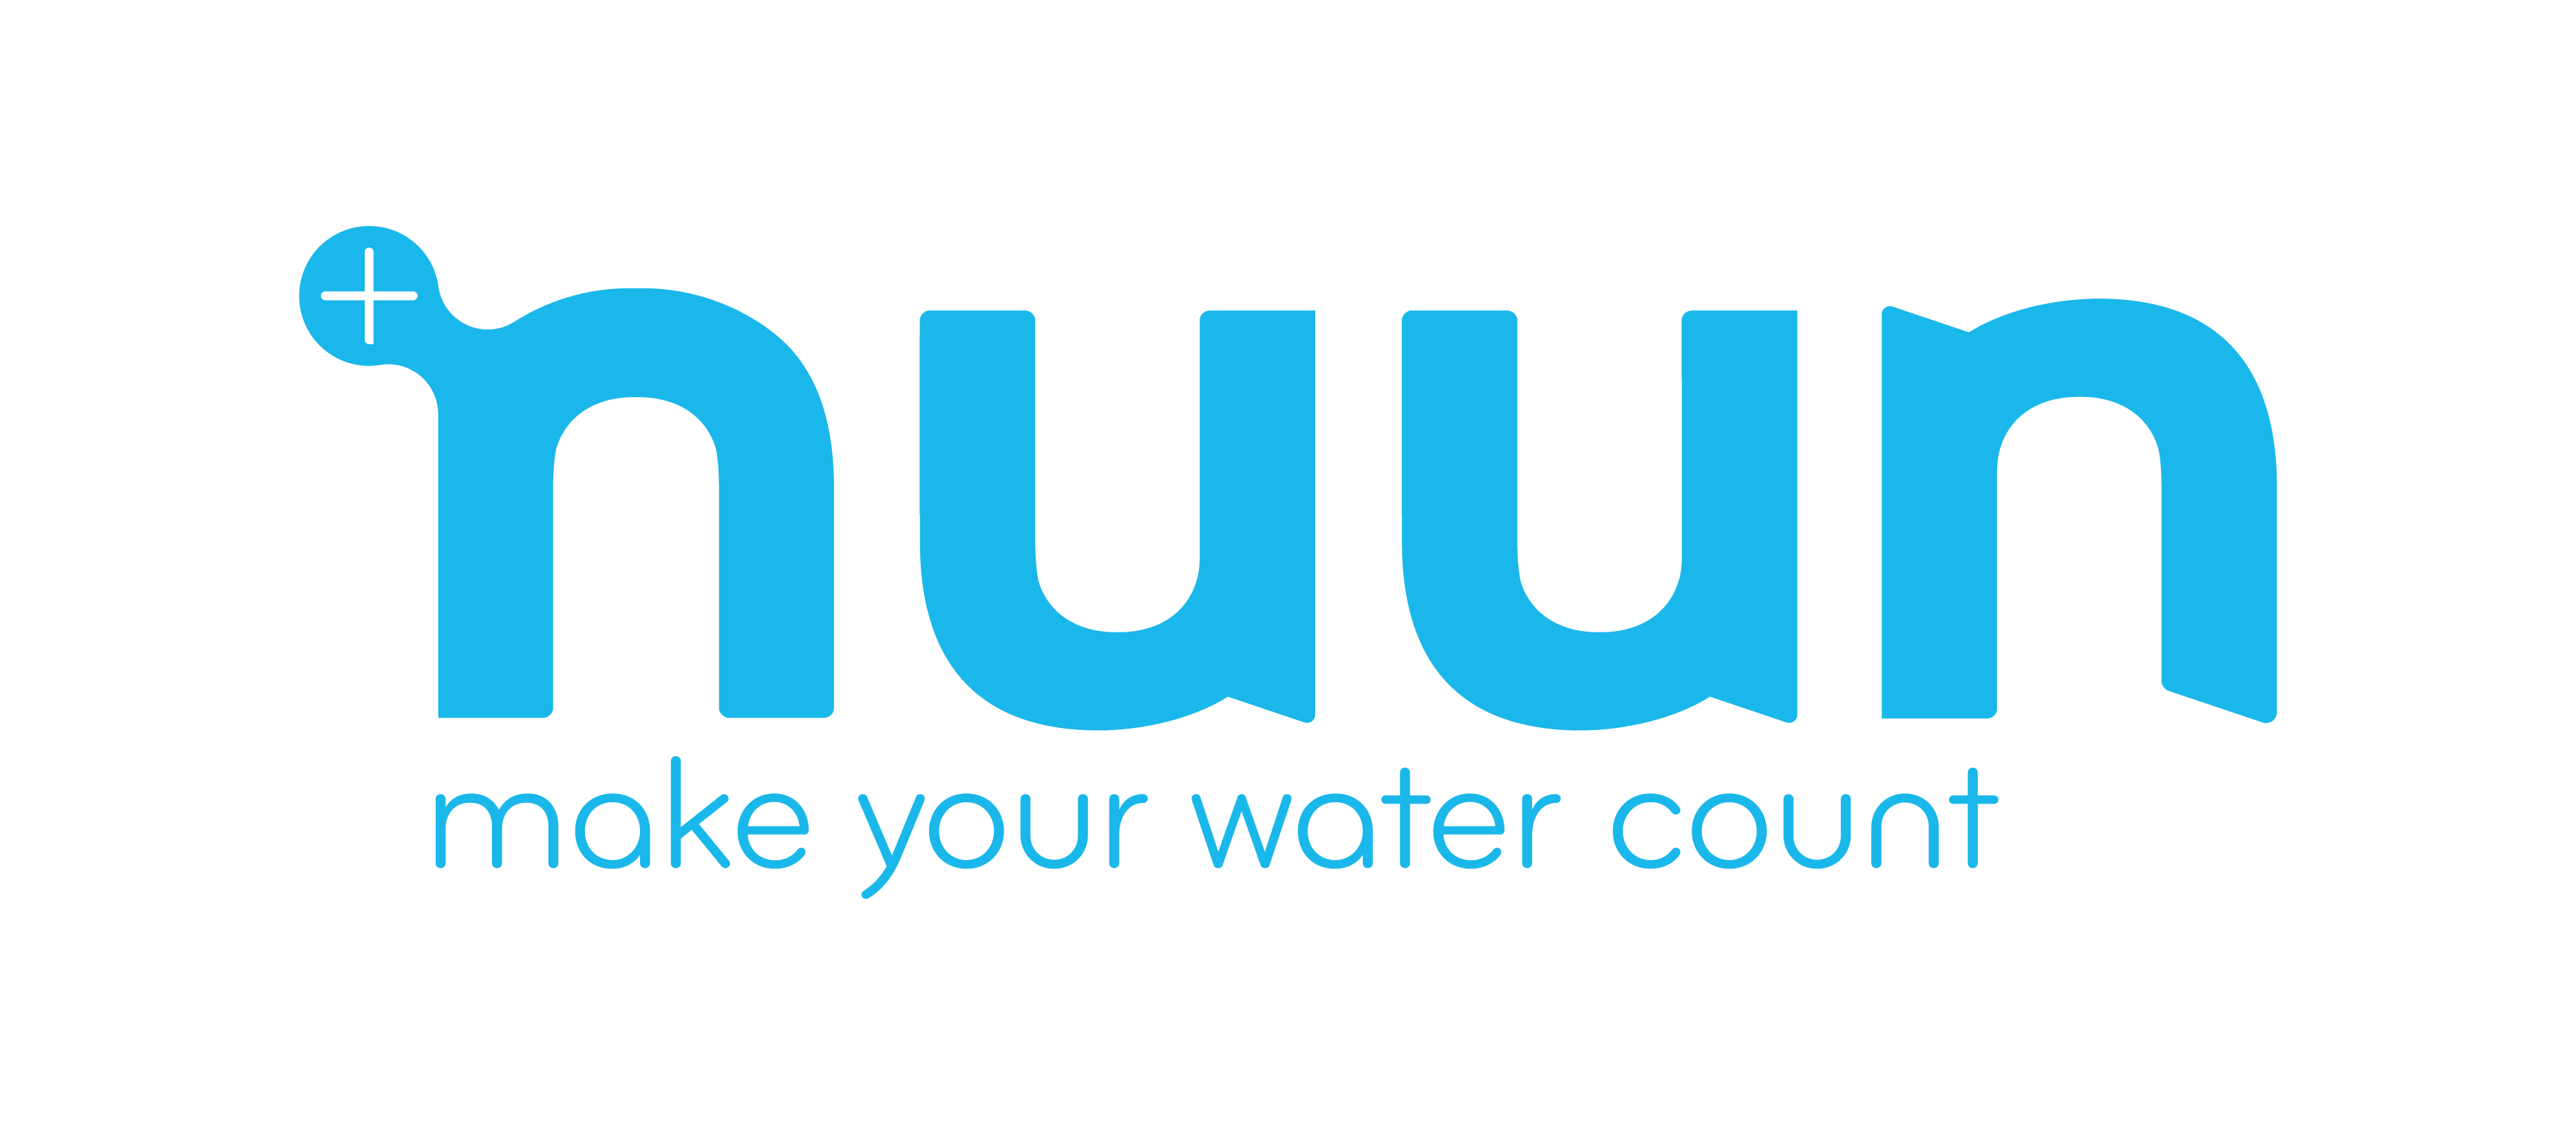 Nuun Hydration logo